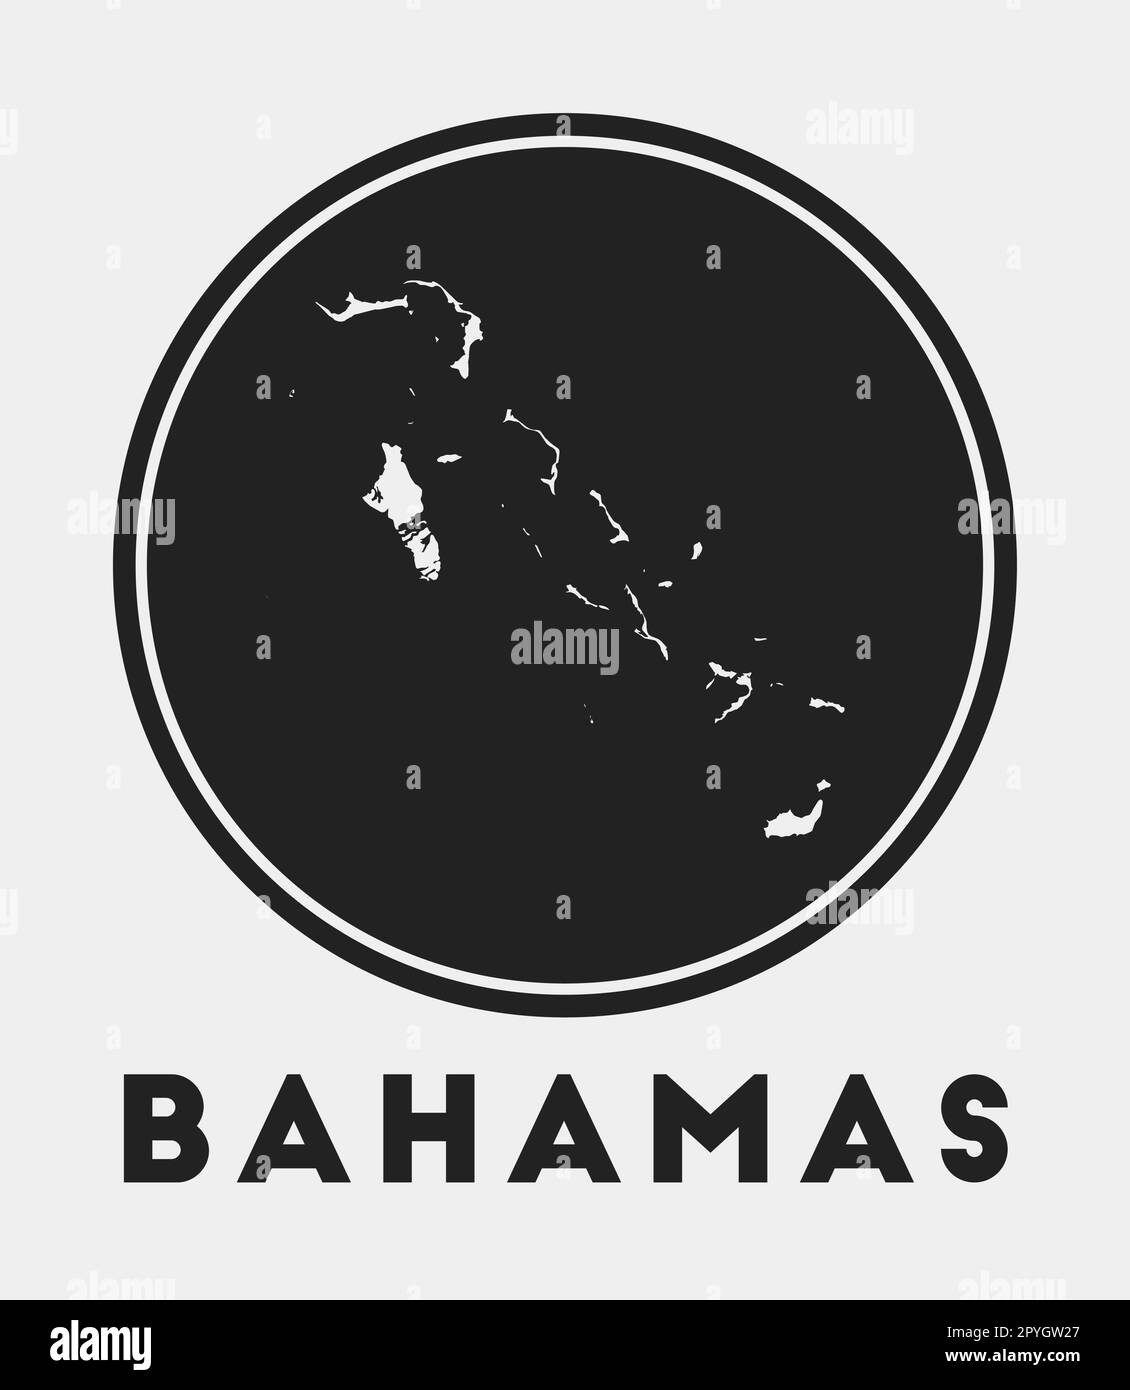 Bahamas icona. Logo rotondo con mappa del paese e titolo. Distintivo elegante Bahamas con mappa. Illustrazione vettoriale. Illustrazione Vettoriale